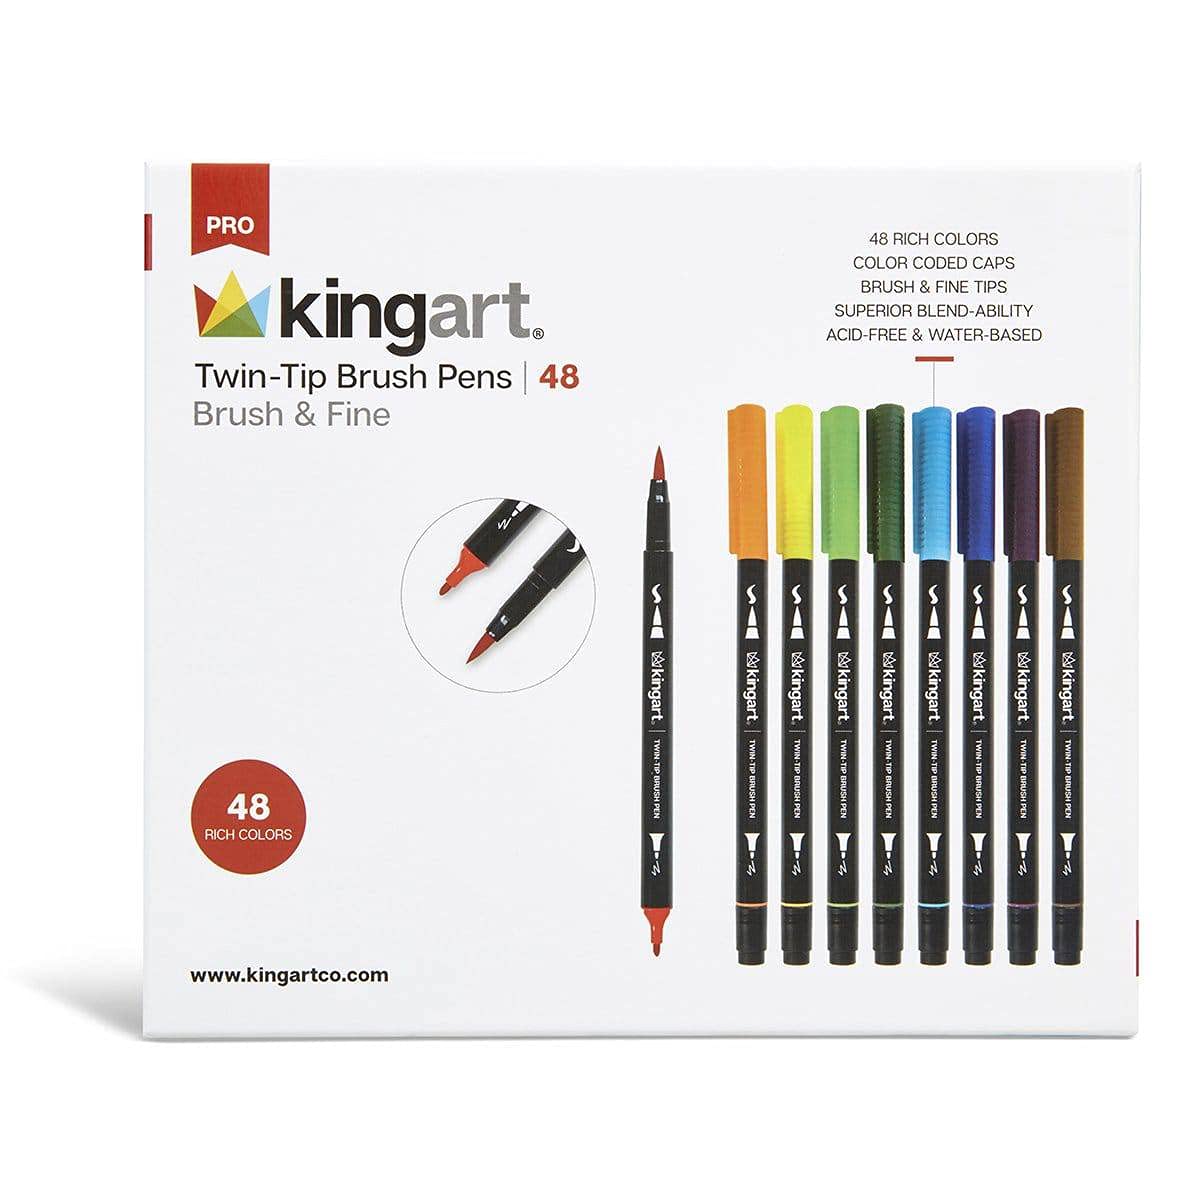  Dual Tip Brush Pen,120 Colored Dual Tip Markers Calligraphy  Pens, Dual Tip Markers for Adult Coloring for Kids Felt Tip Watercolor Pens  for Drawing Planner Calendar Art Markers Sketch School